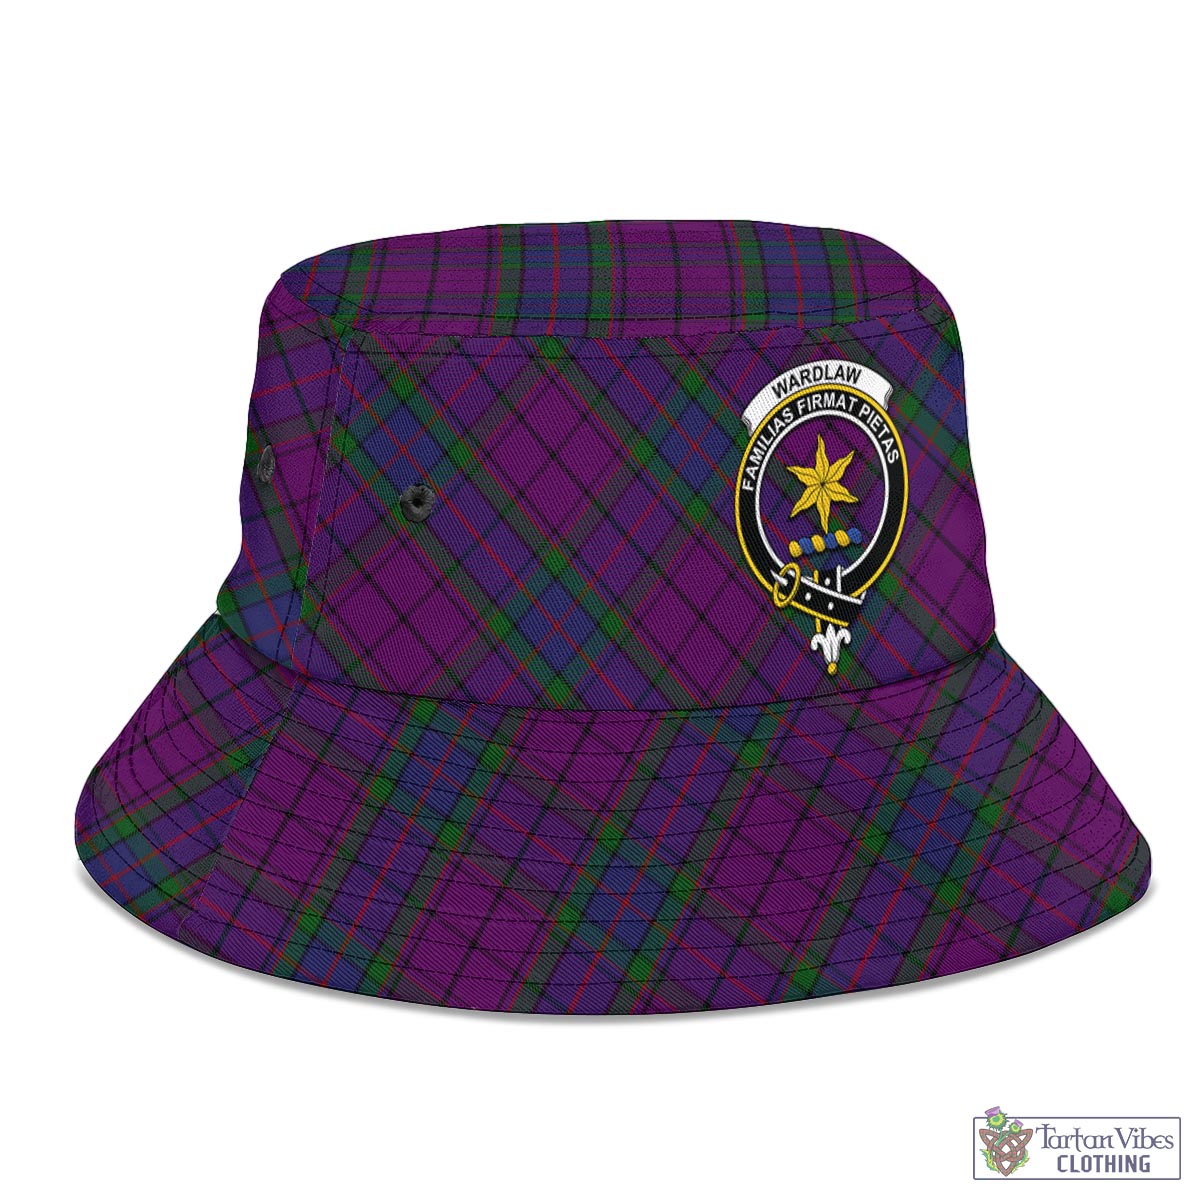 Tartan Vibes Clothing Wardlaw Tartan Bucket Hat with Family Crest